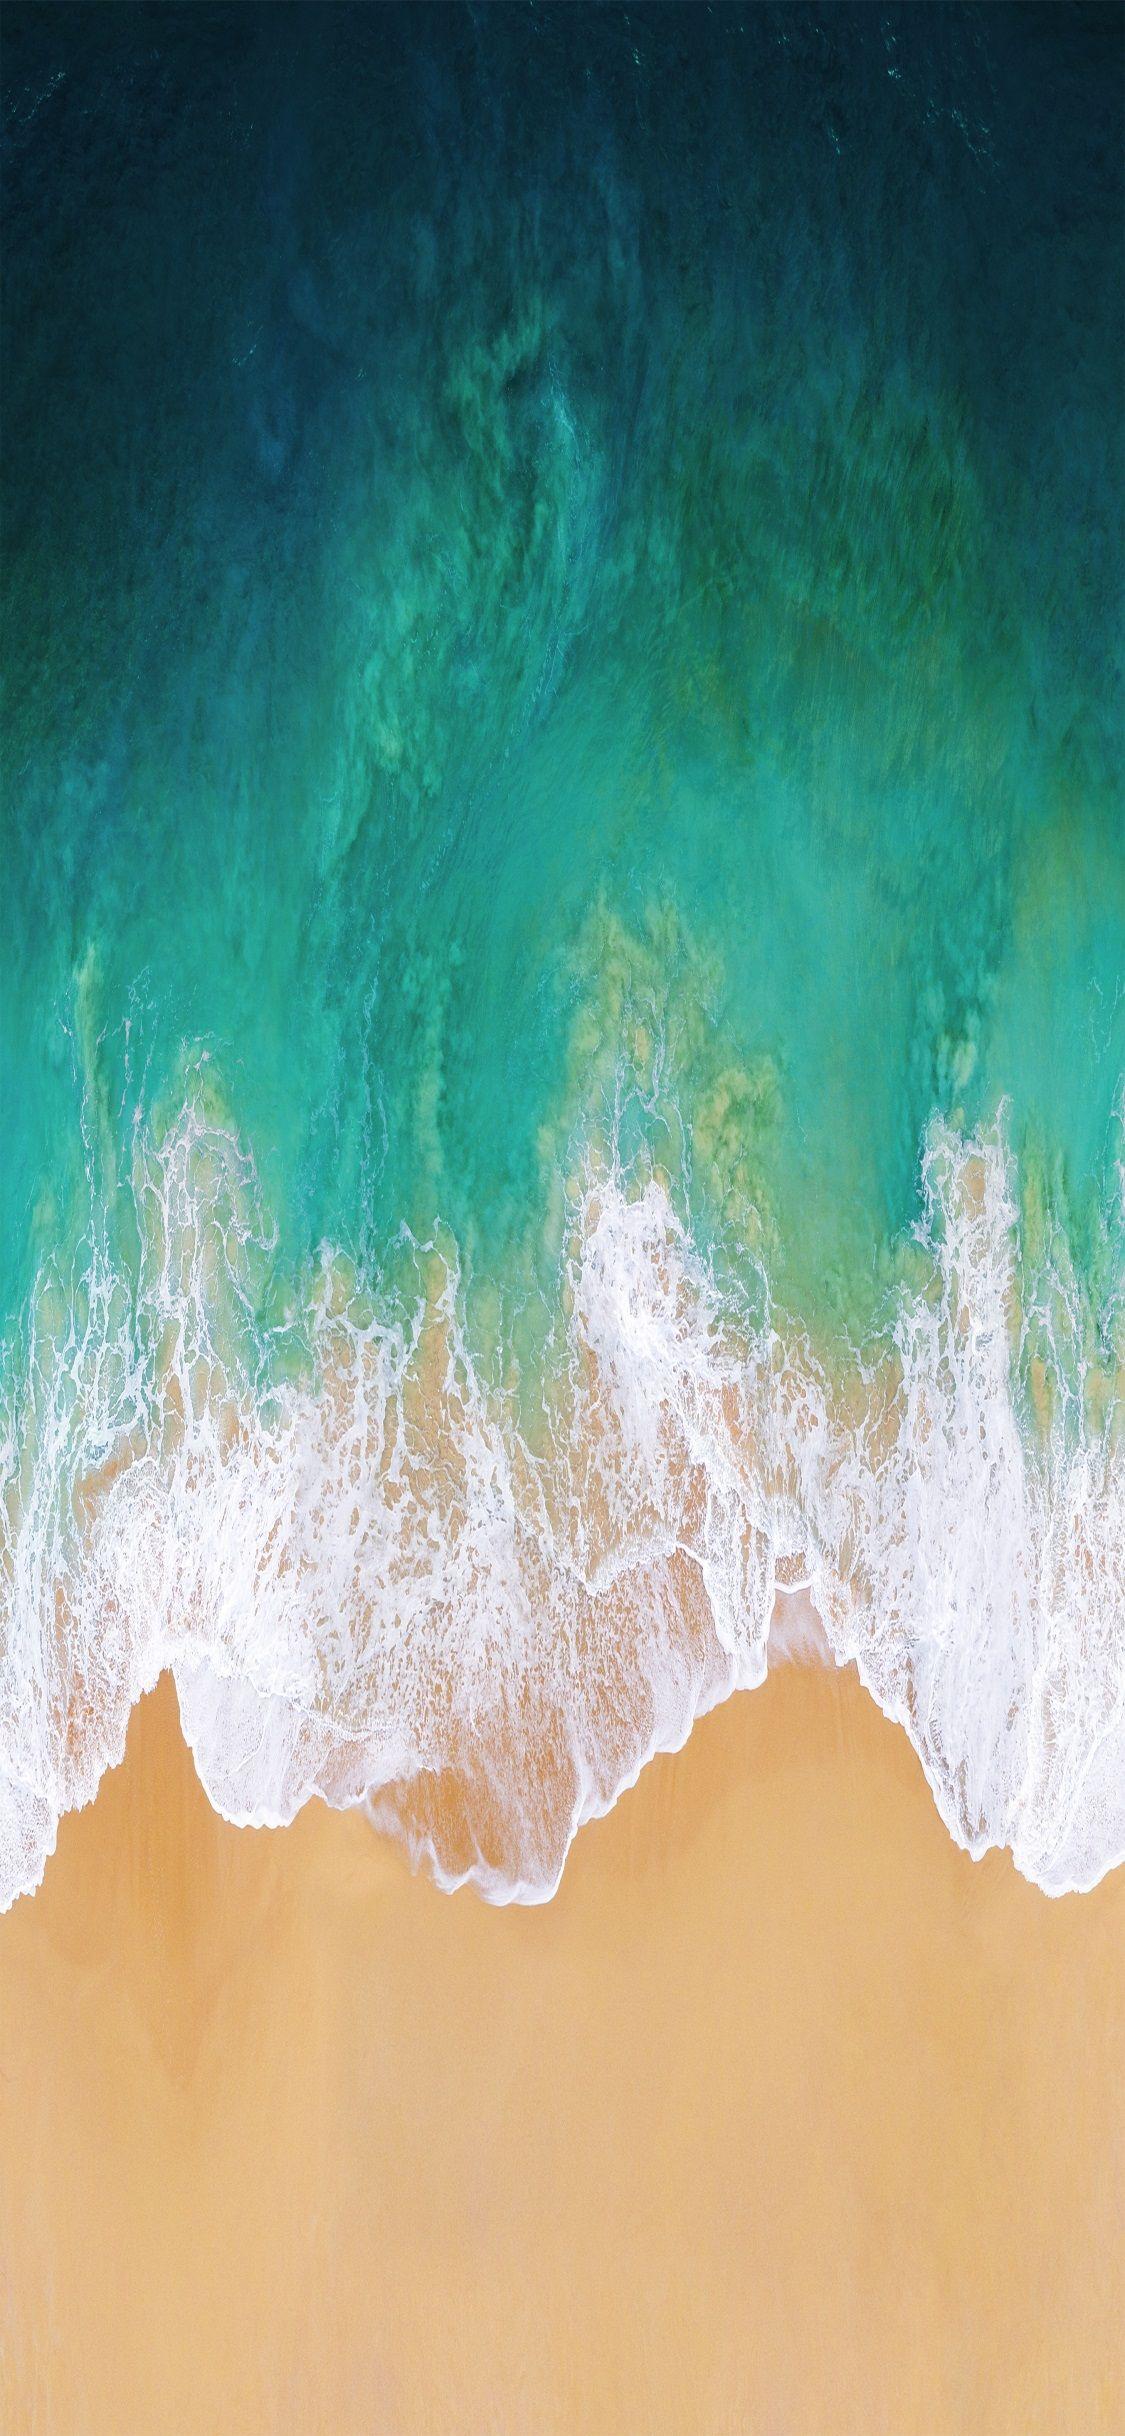 iPhone X Default Wallpapers - Top Free iPhone X Default Backgrounds ...